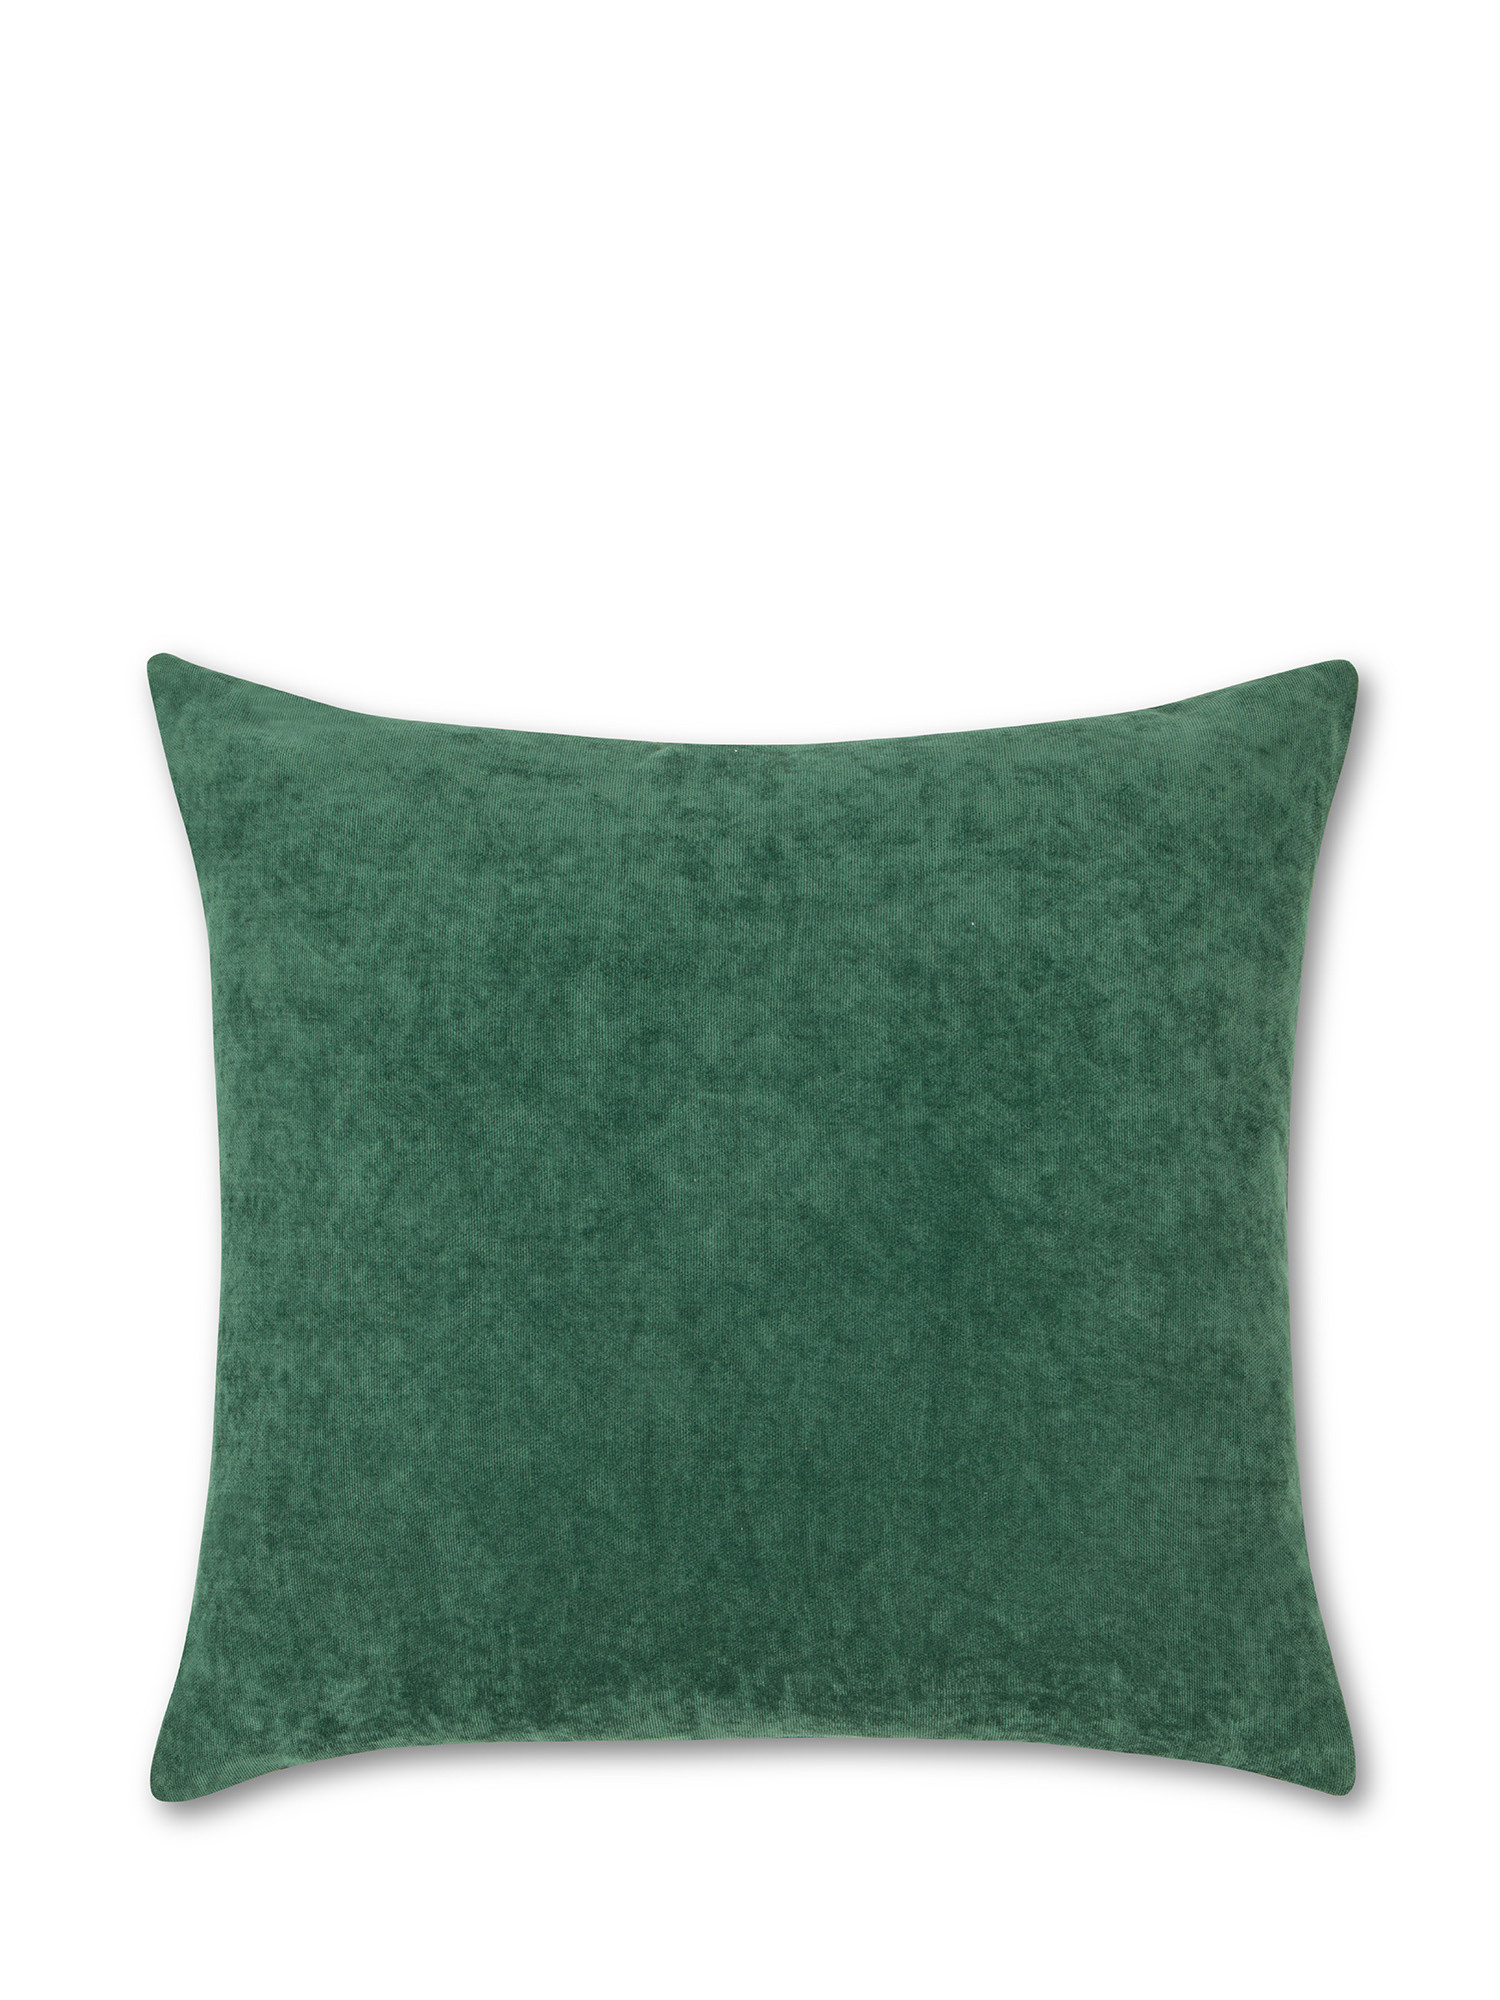 Cuscino tessuto teddy 43x43cm, Verde, large image number 1